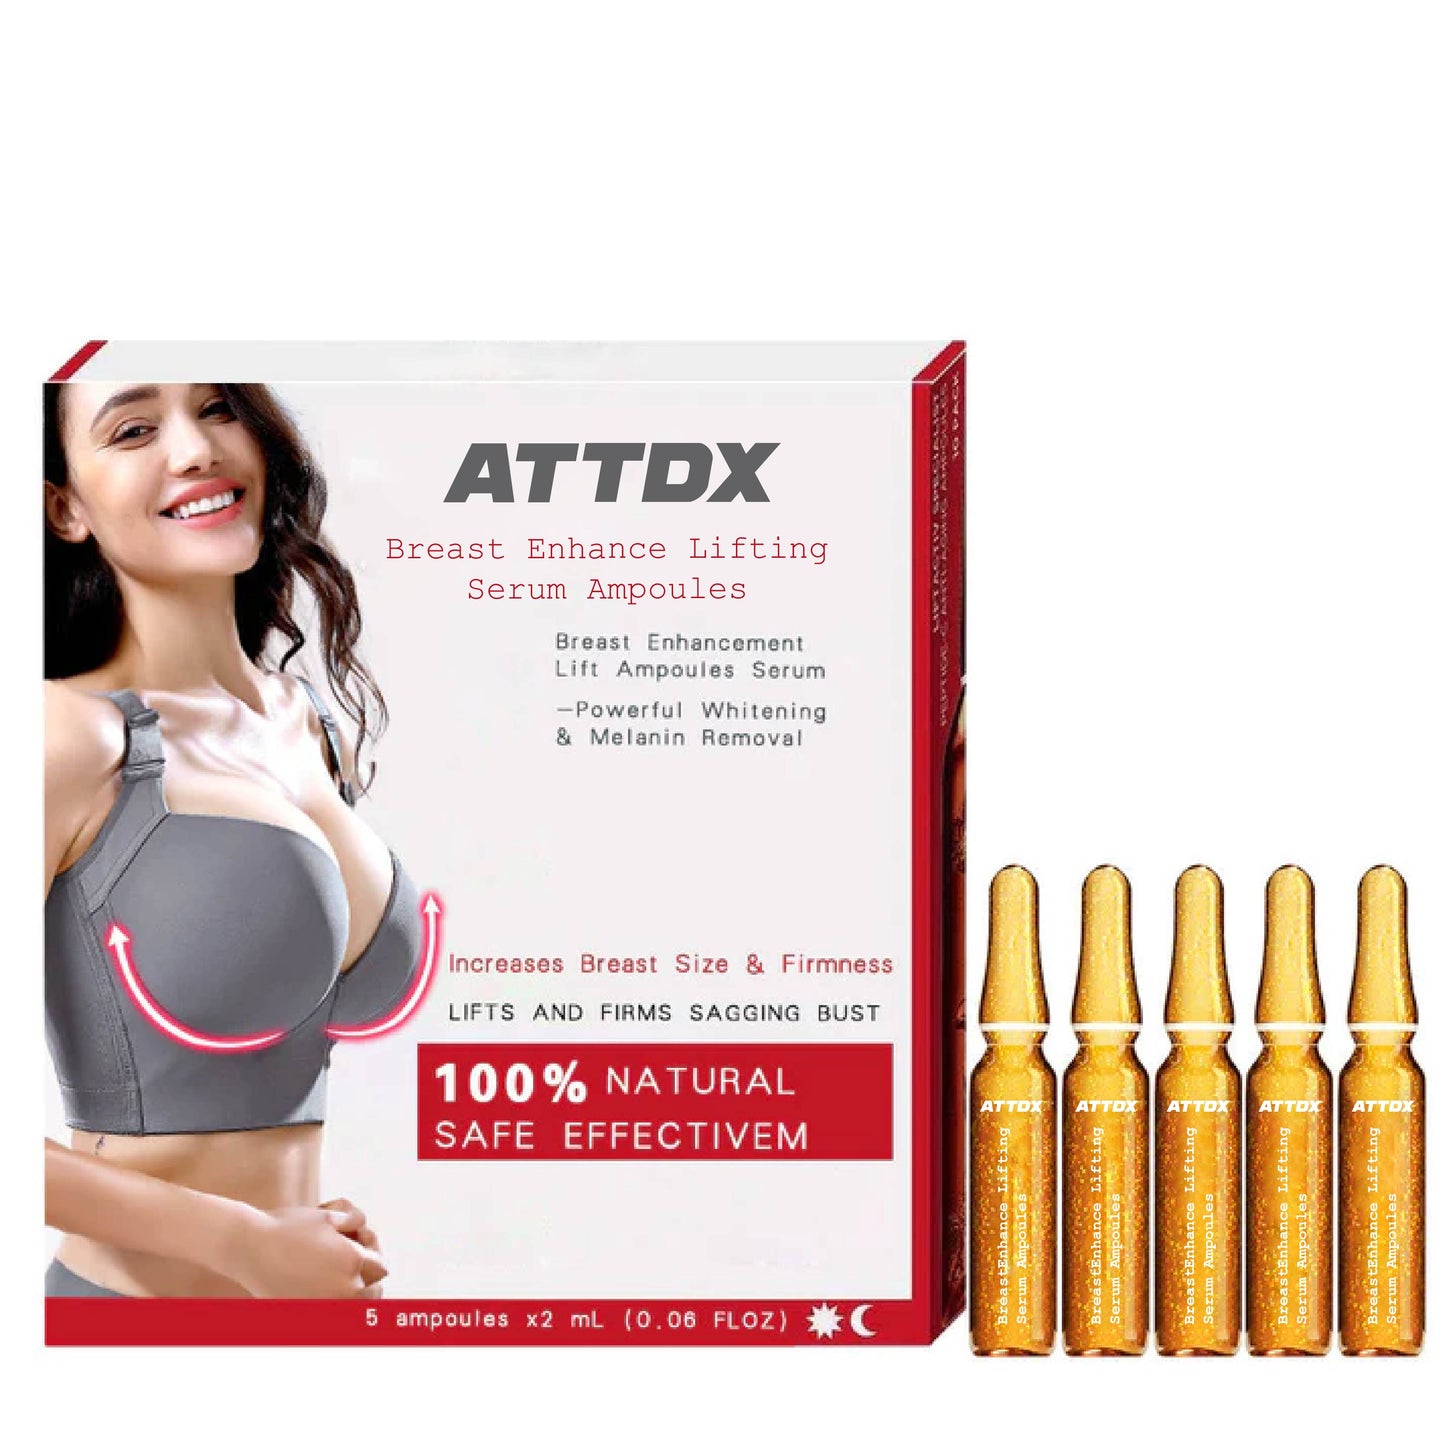 ATTDX BreastEnhance Lifting Serum Ampoules